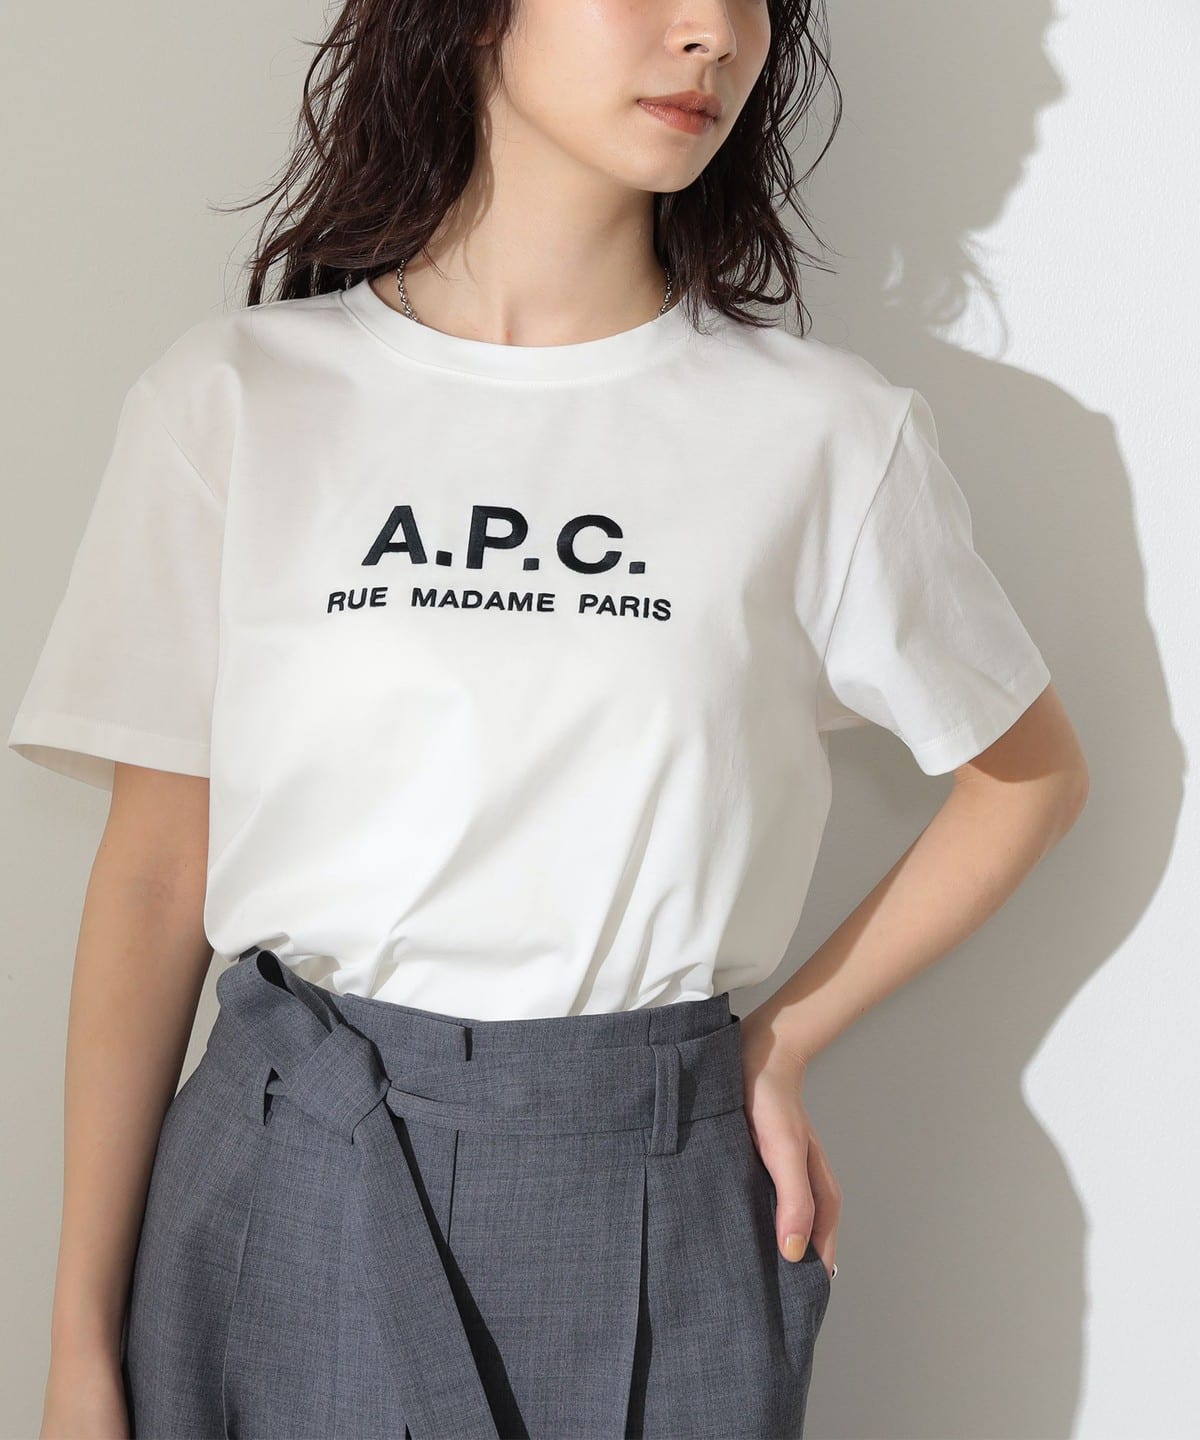 A.P.C夏TシャツSサイズ Rue Madame apcアーペーセーtシャツ www